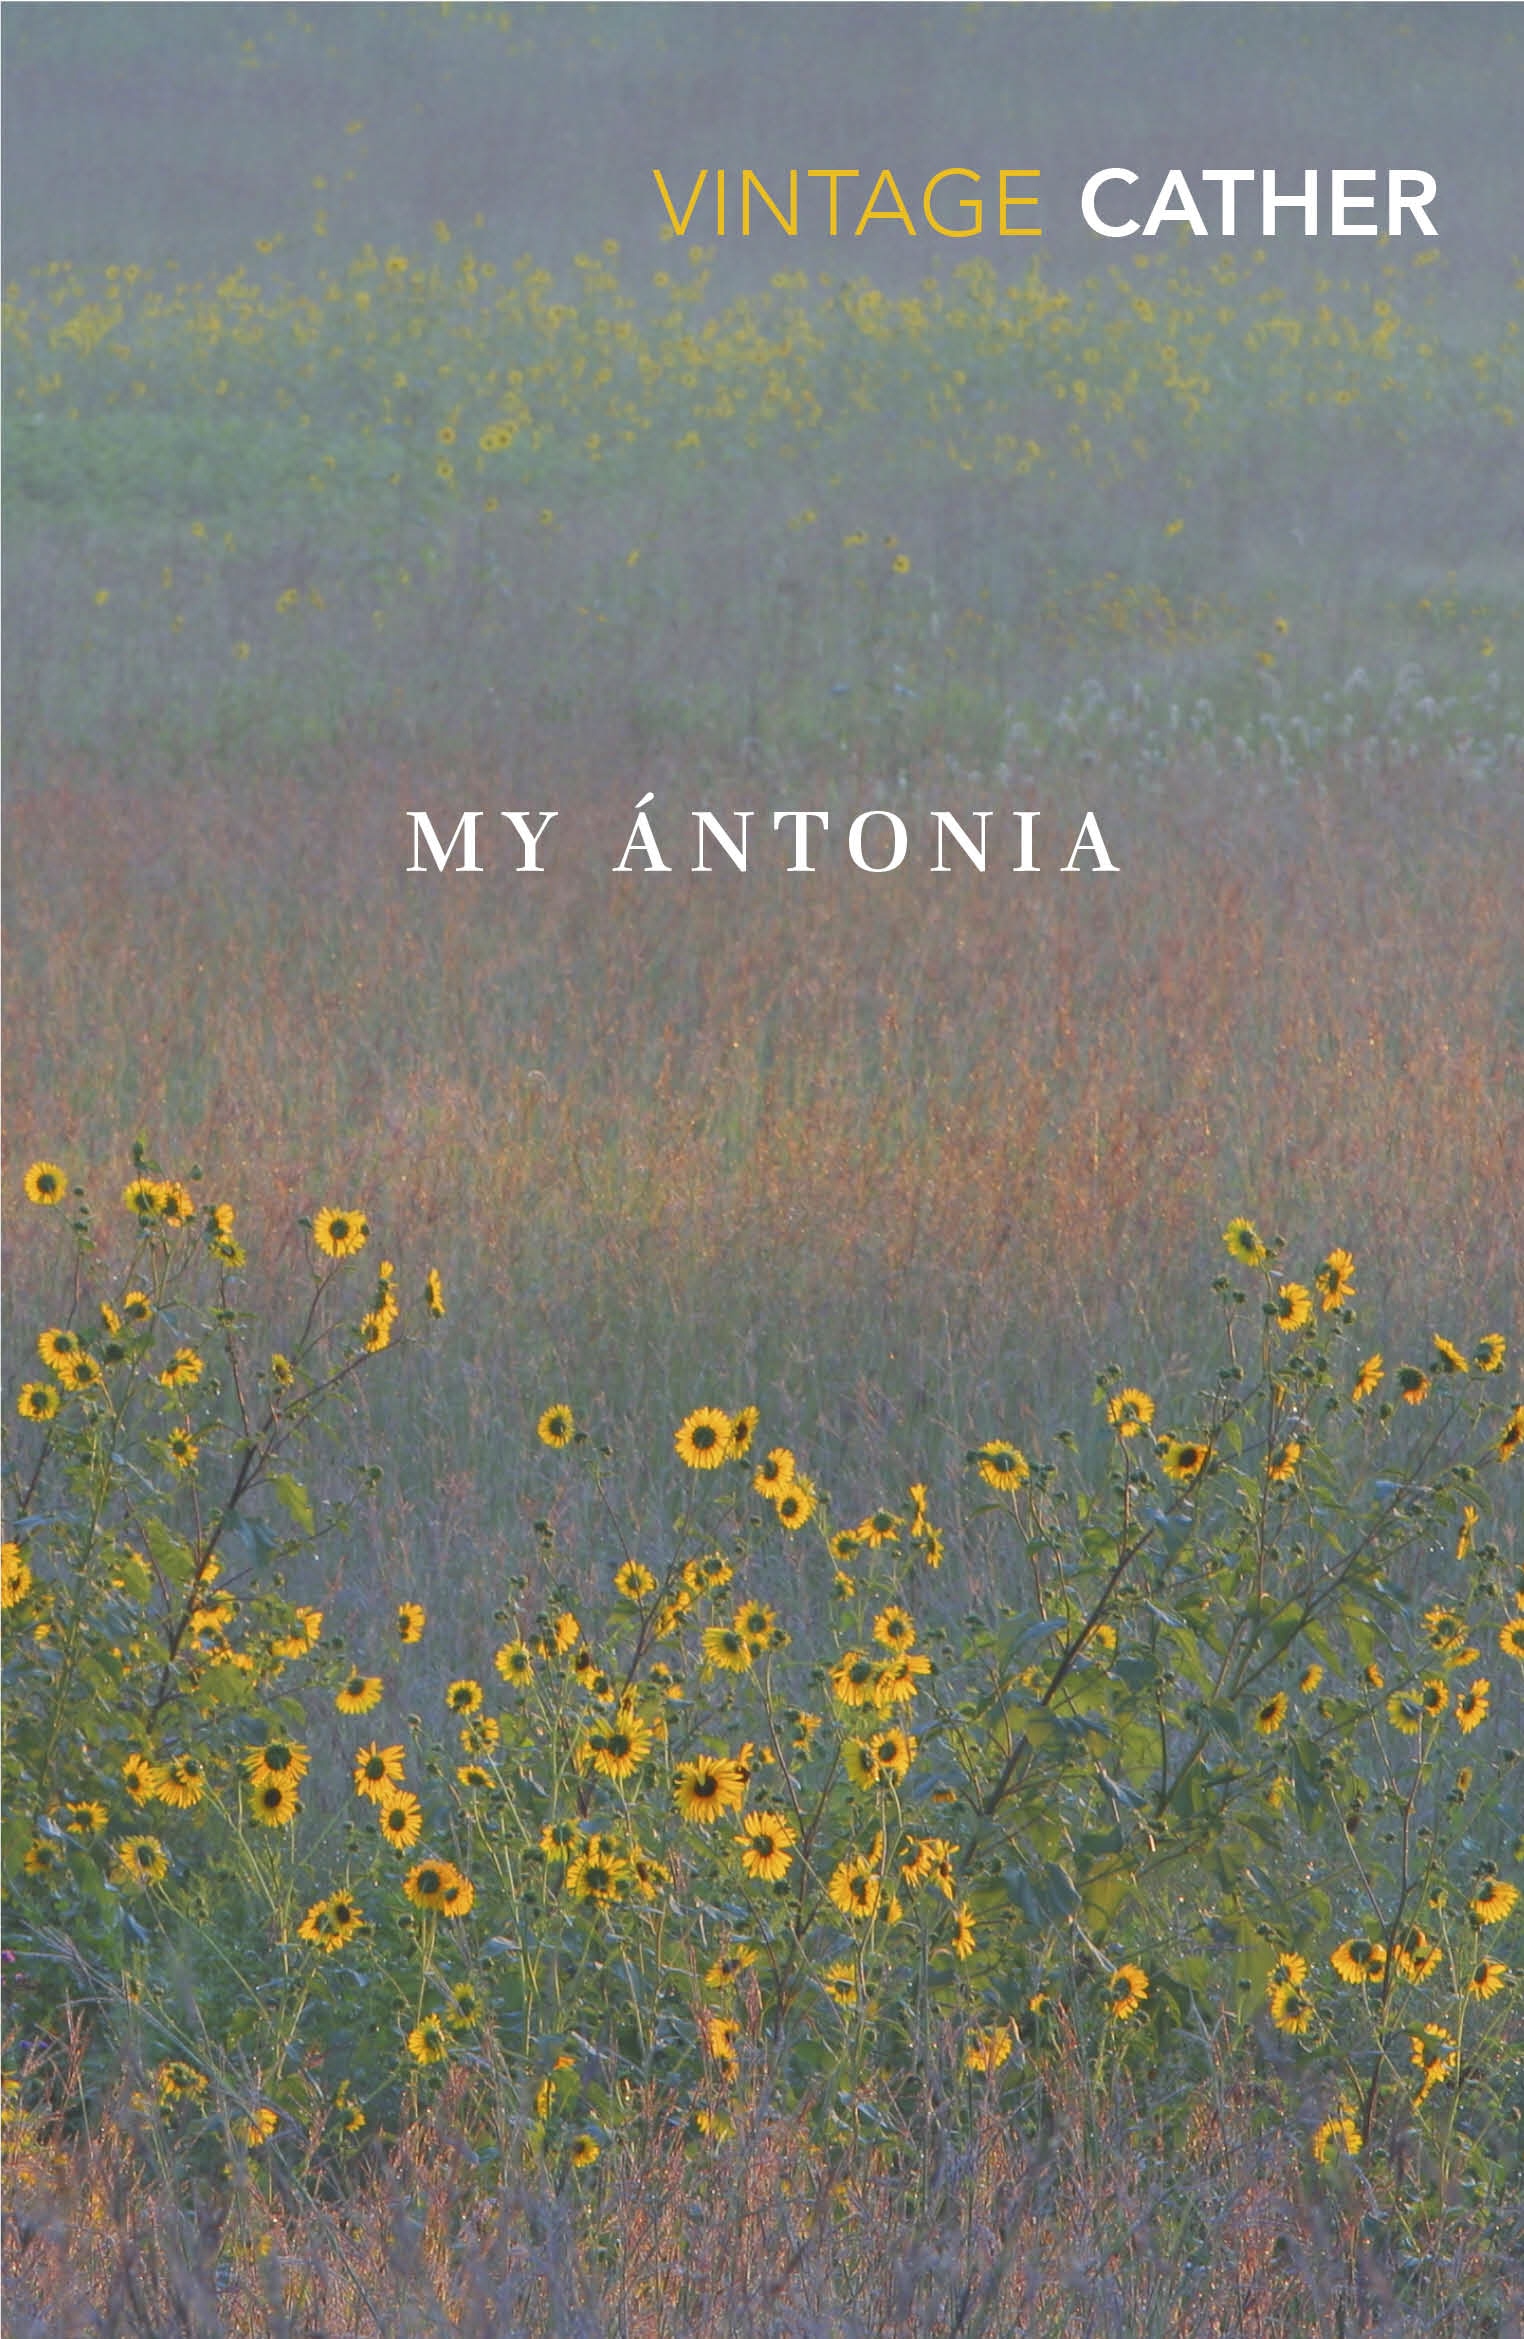 Book “My Ántonia” by Willa Cather, Sara Wheeler — September 5, 2019